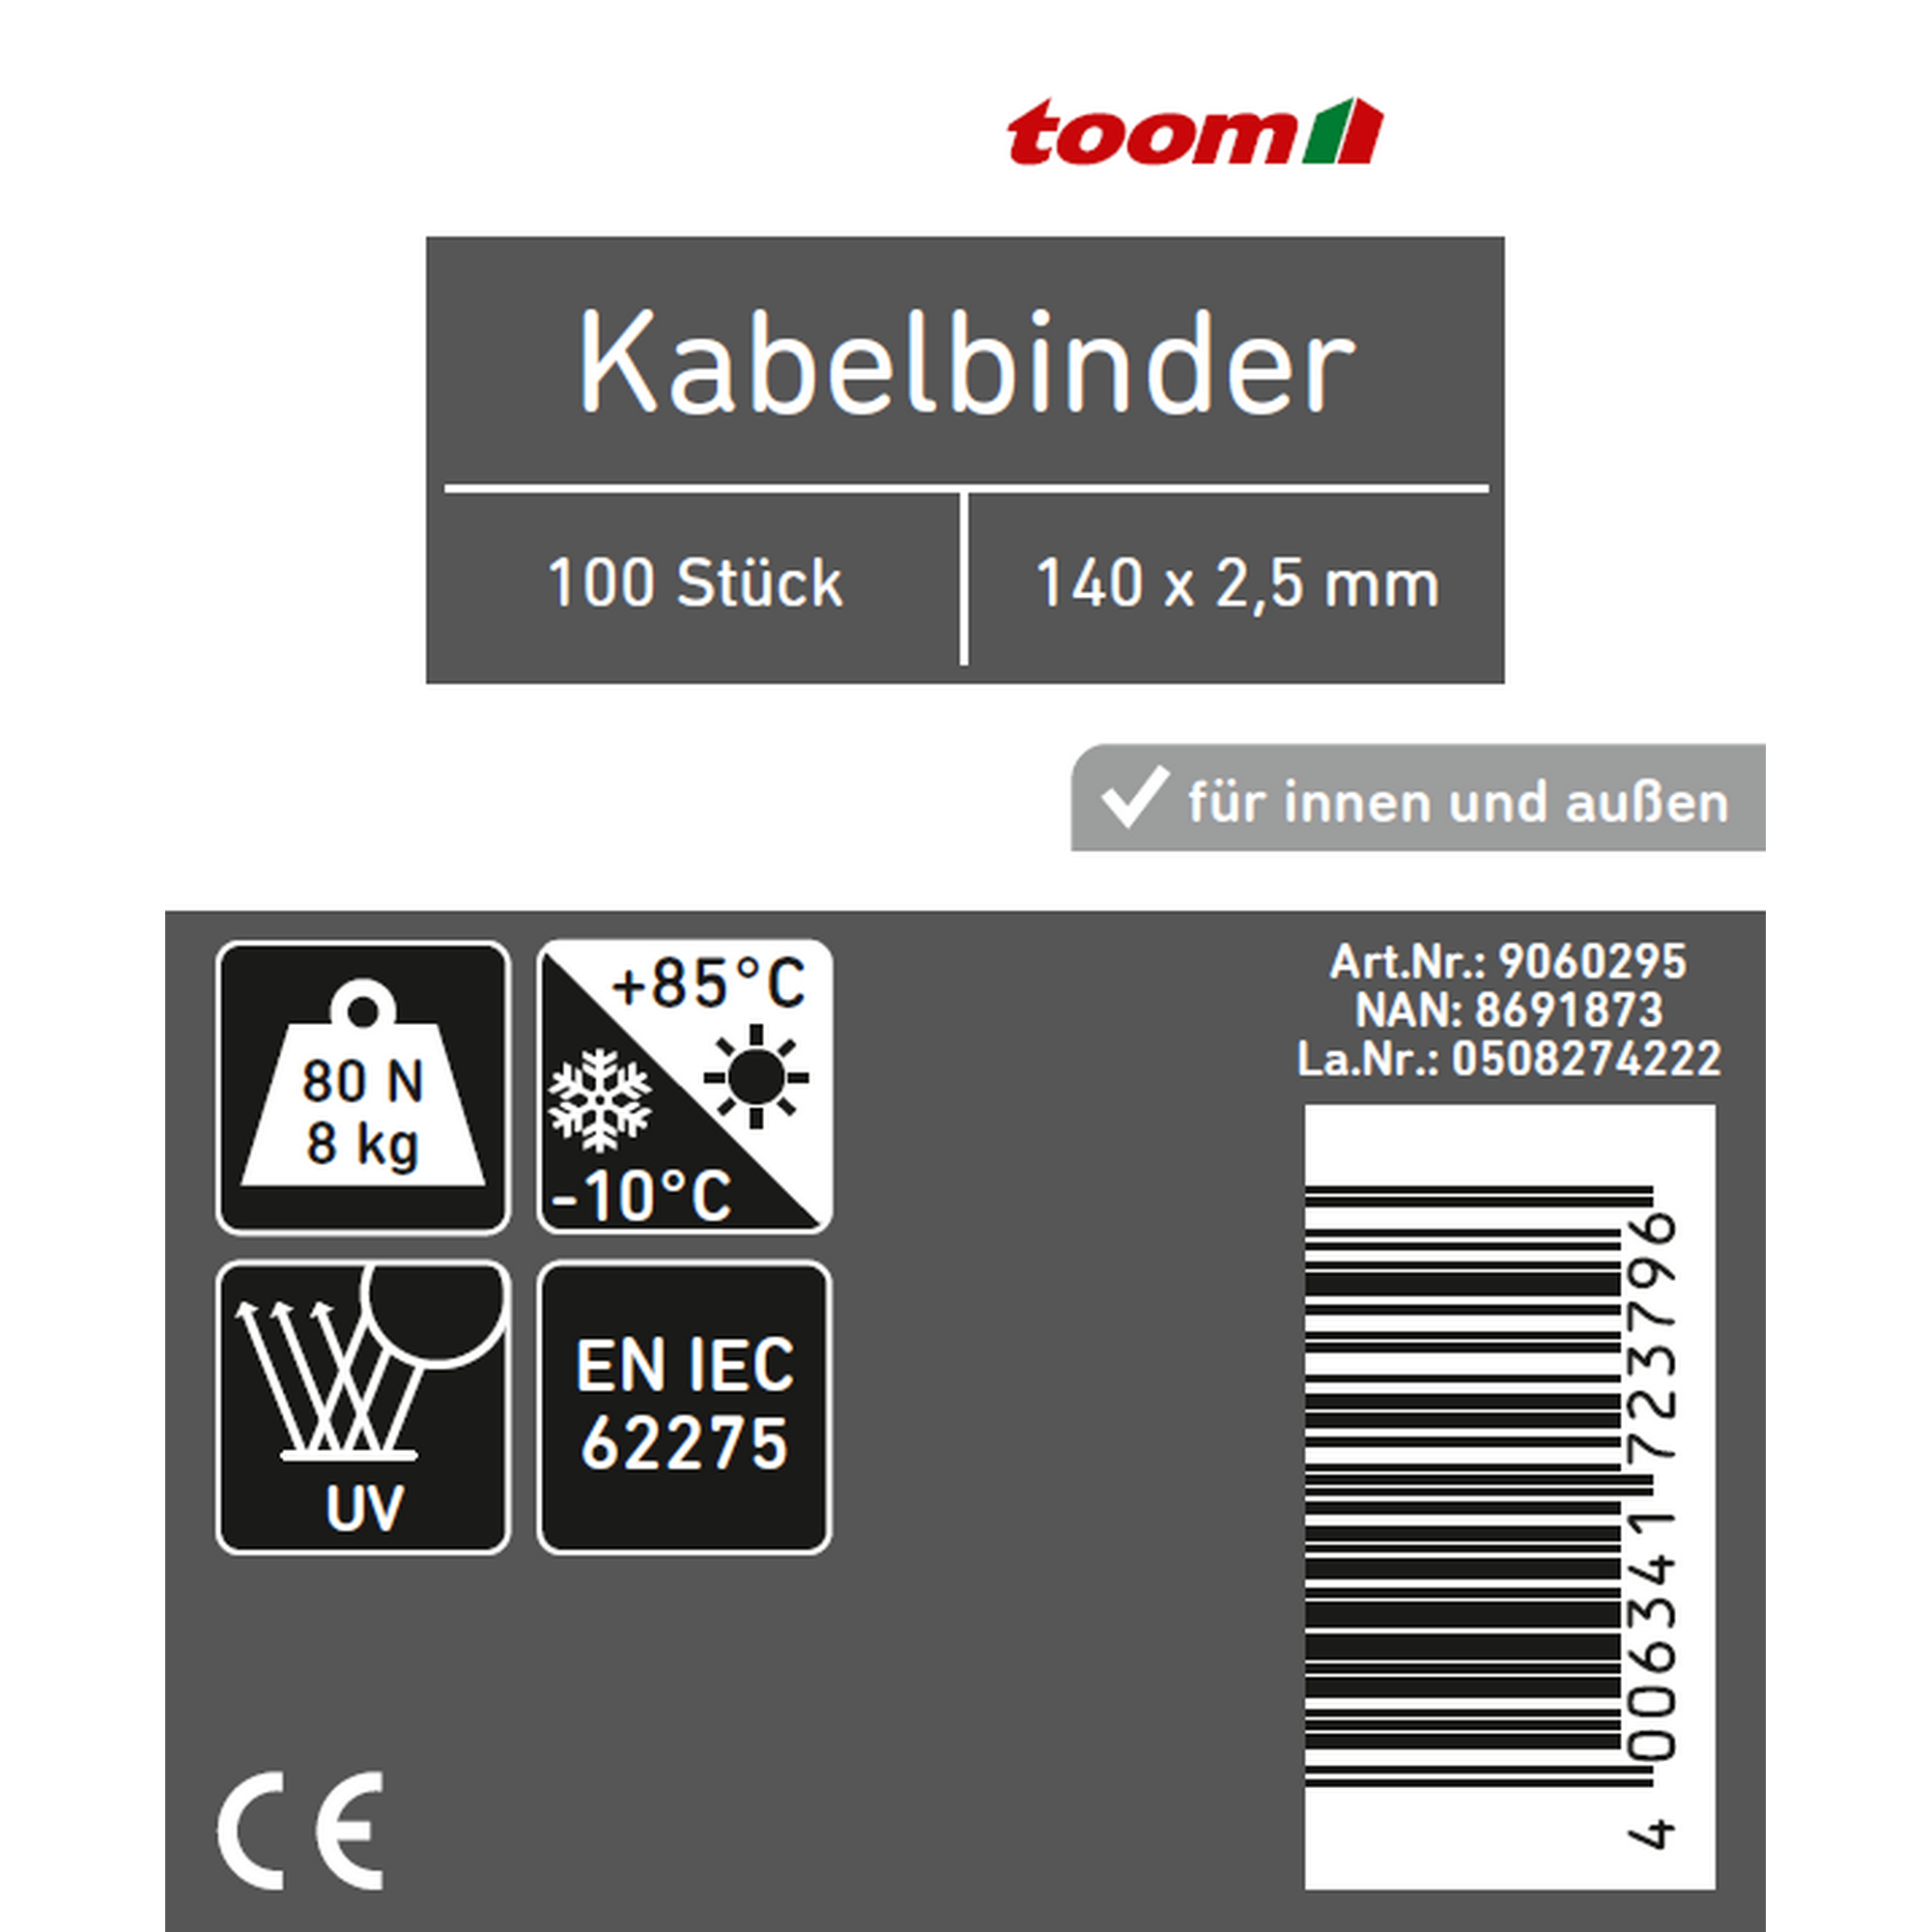 Kabelbinder schwarz 2,5 x 140 mm 100 Stück + product picture